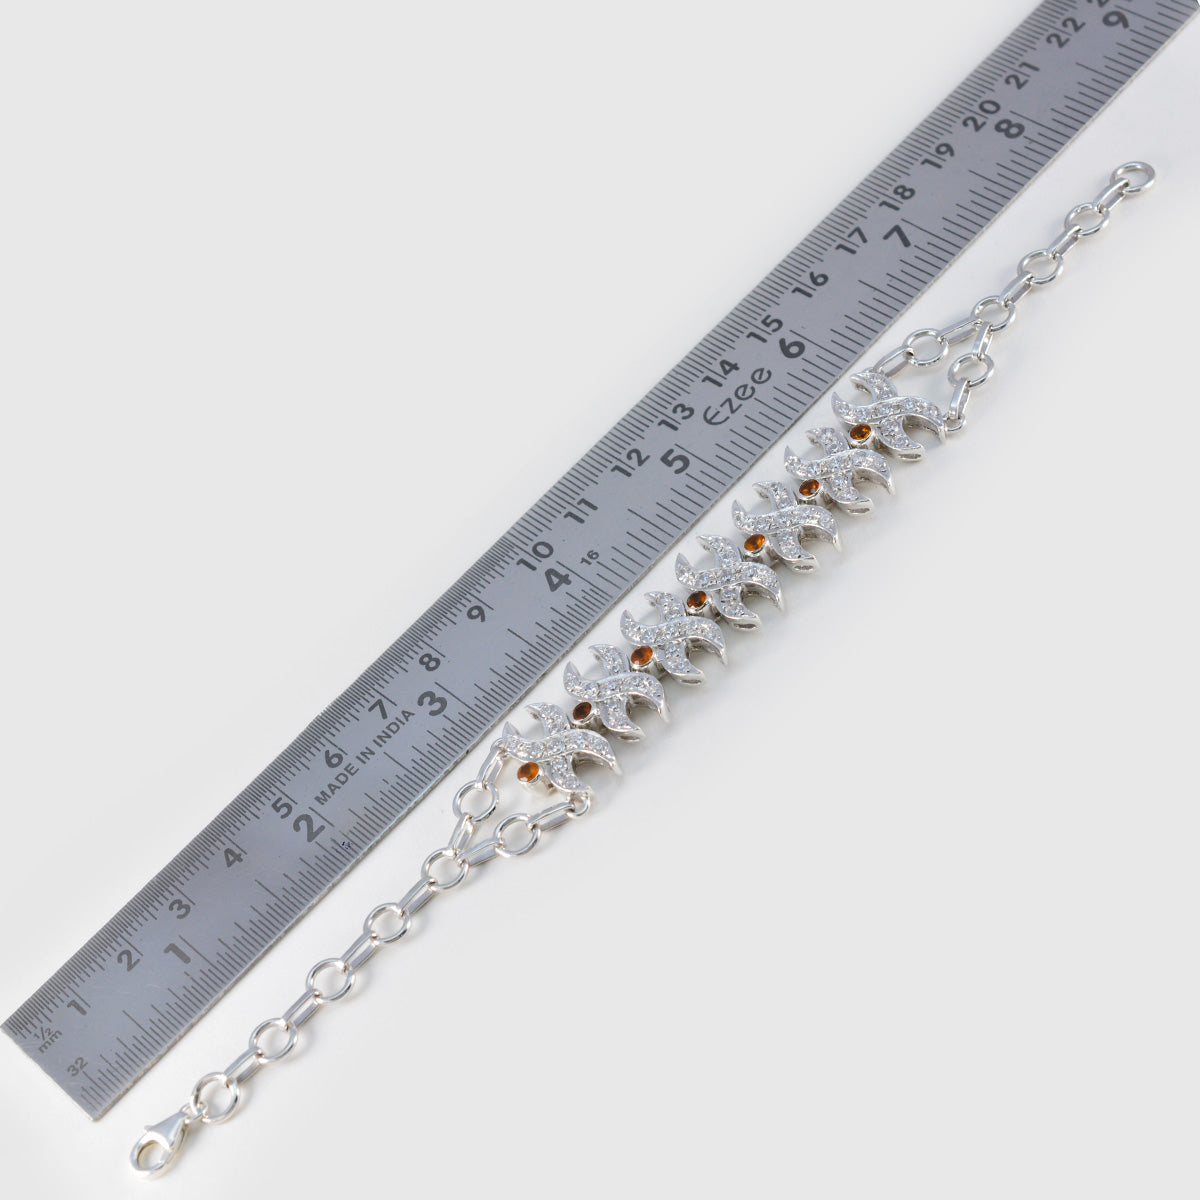 Riyo Indiase 925 sterling zilveren armband voor vrouwen Citrien armband bedelarmband met vishaak bedelarmband L maat 6-8,5 inch.